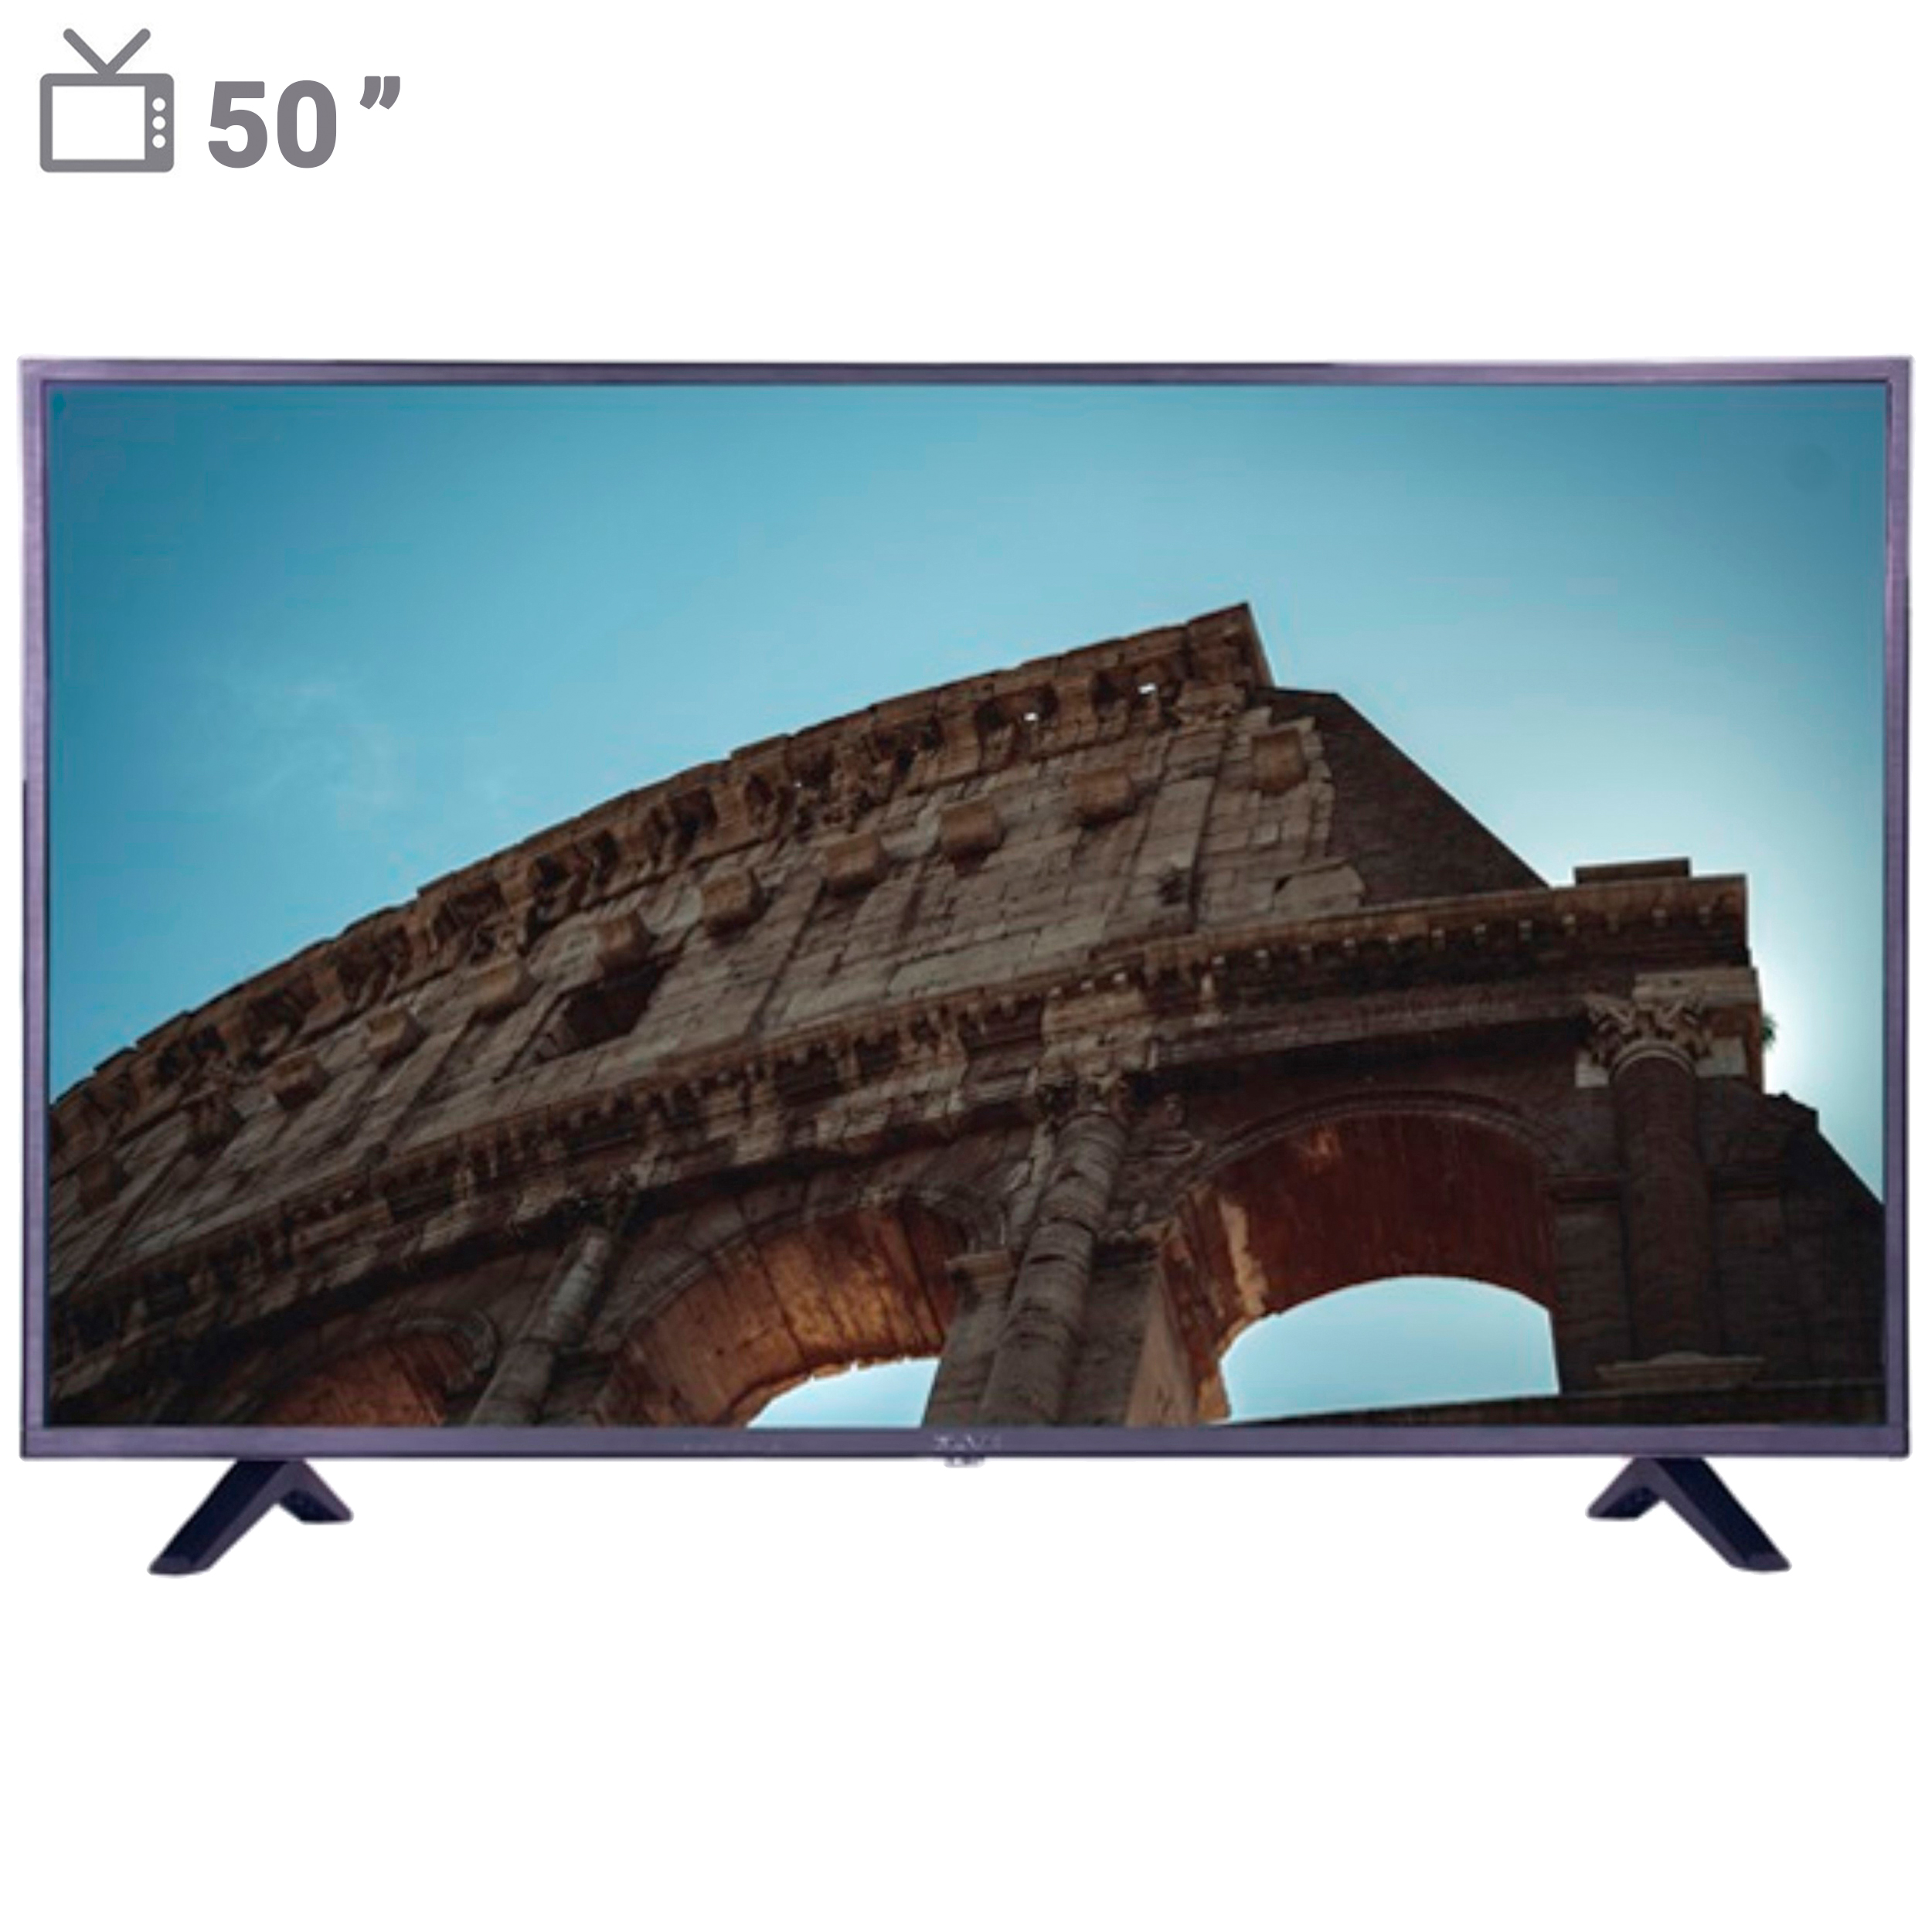 تلویزیون ال ای دی الیو مدل 50UF7410 سایز 50 اینچ